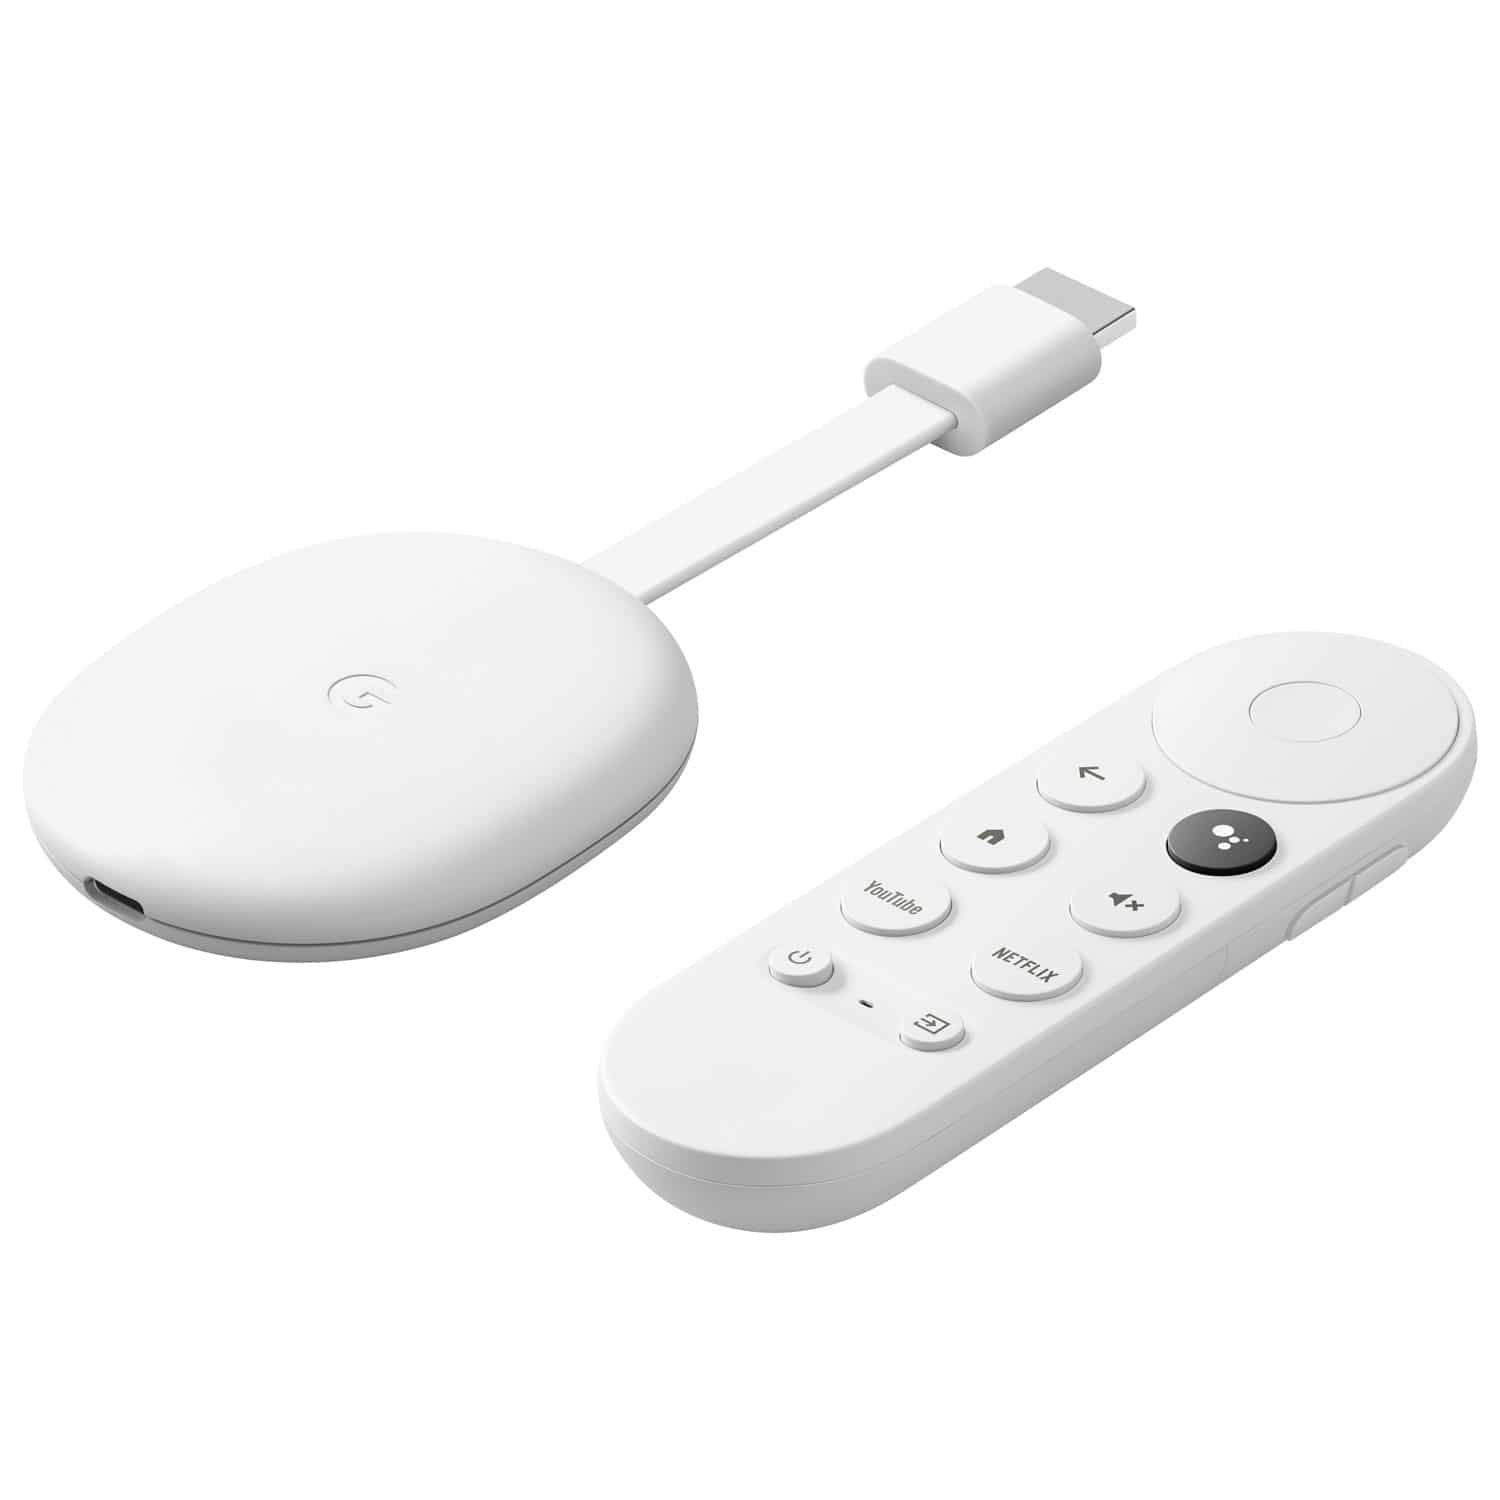 Google Chromecast With Google TV - WorkwearToronto.com - Best Gift Ideas For Men - Christmas 2020 Ideas for men - Amazon